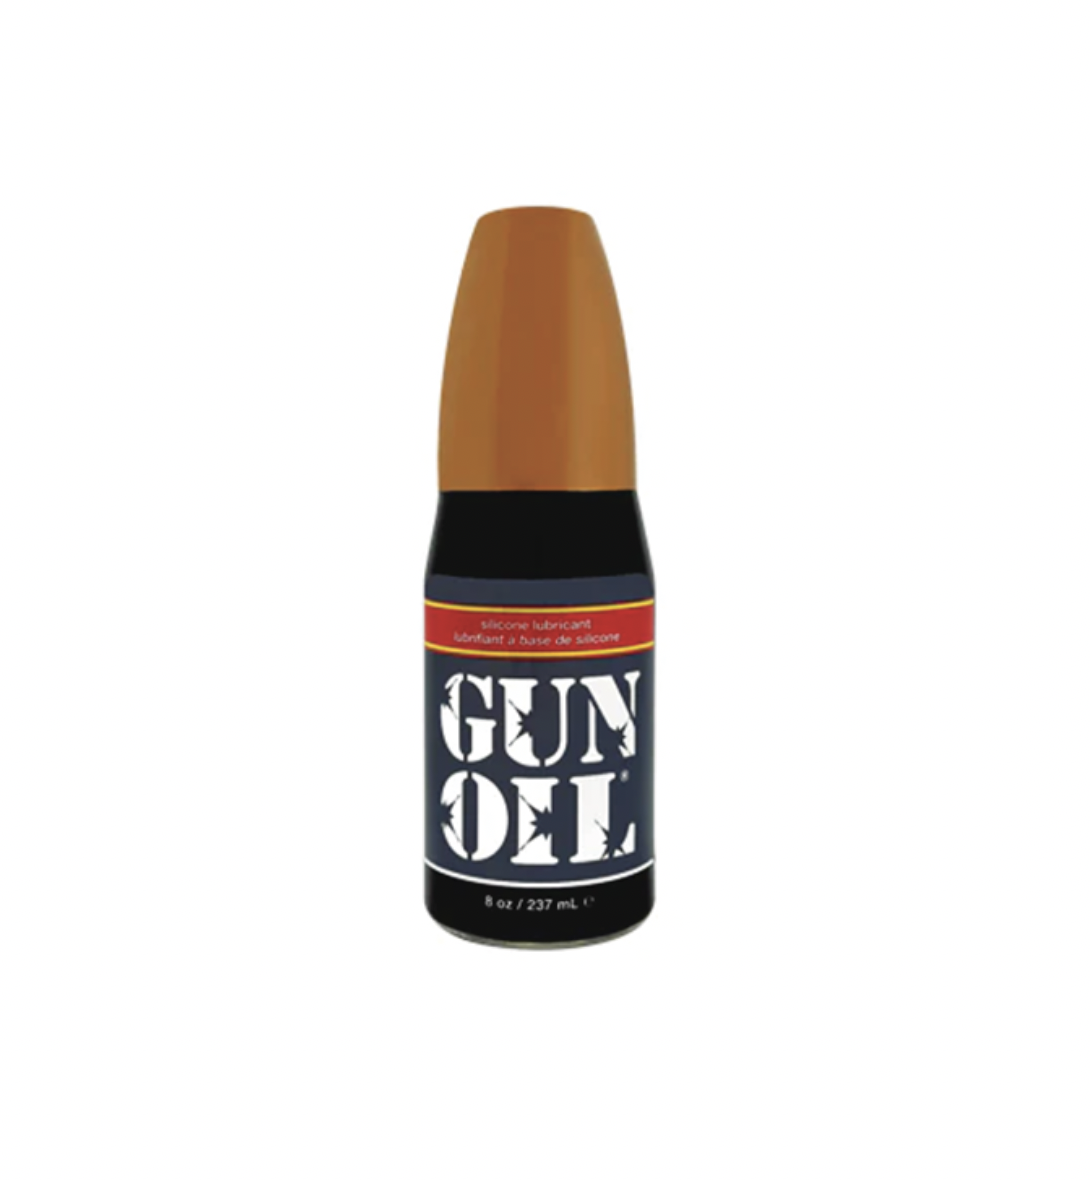 Gun Oil Silicone 04 oz